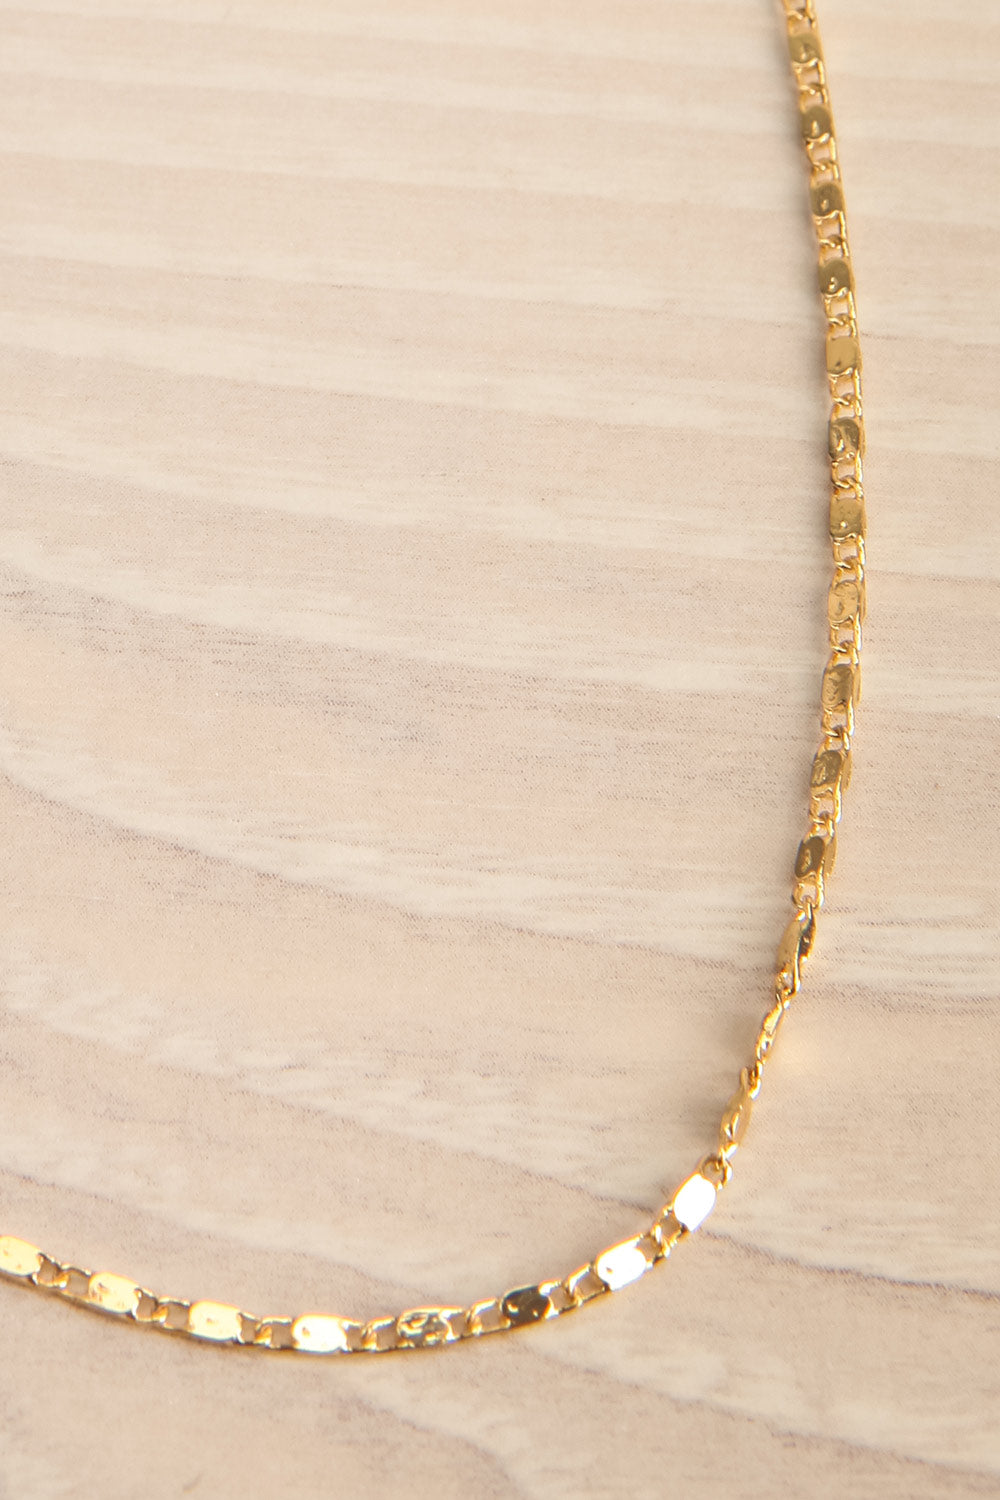 Eurotas Gold Chain w/ Flat Polished Links | La petite garçonne flat close-up